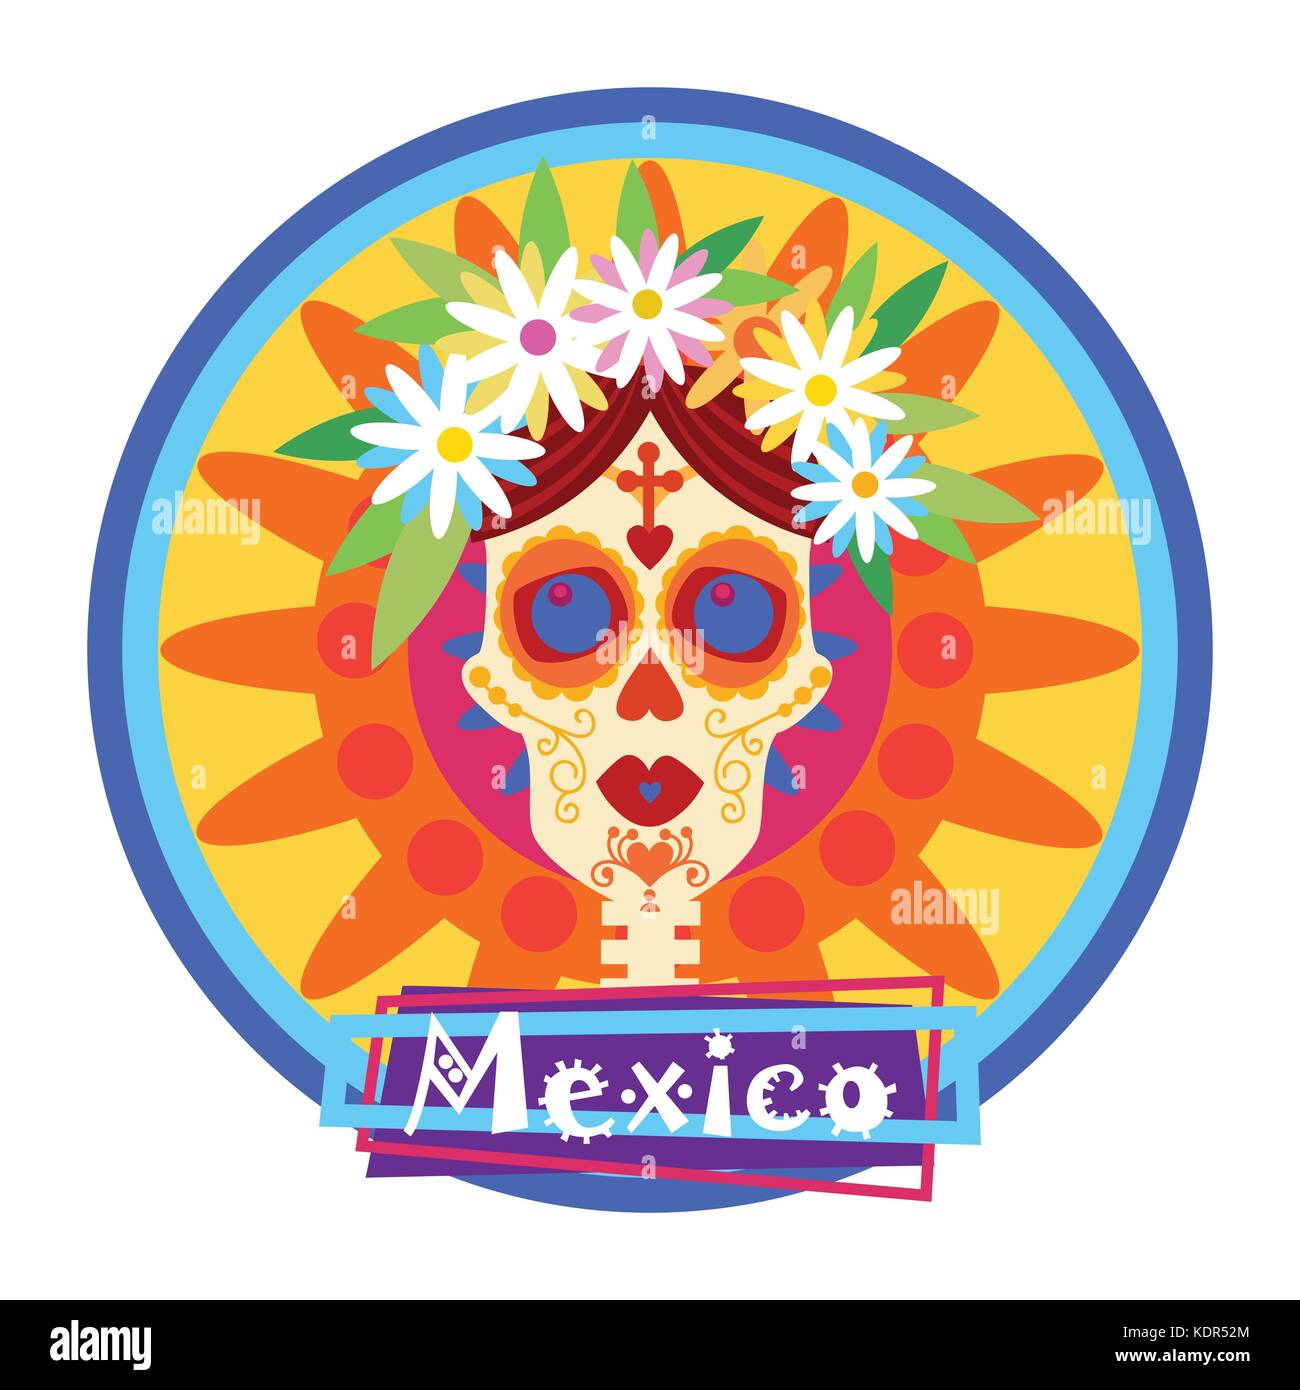 Schädel Tag der Toten Konzept traditionelle mexikanische halloween Dia de los Muertos Holiday Party Dekoration banner Einladung Stock Vektor